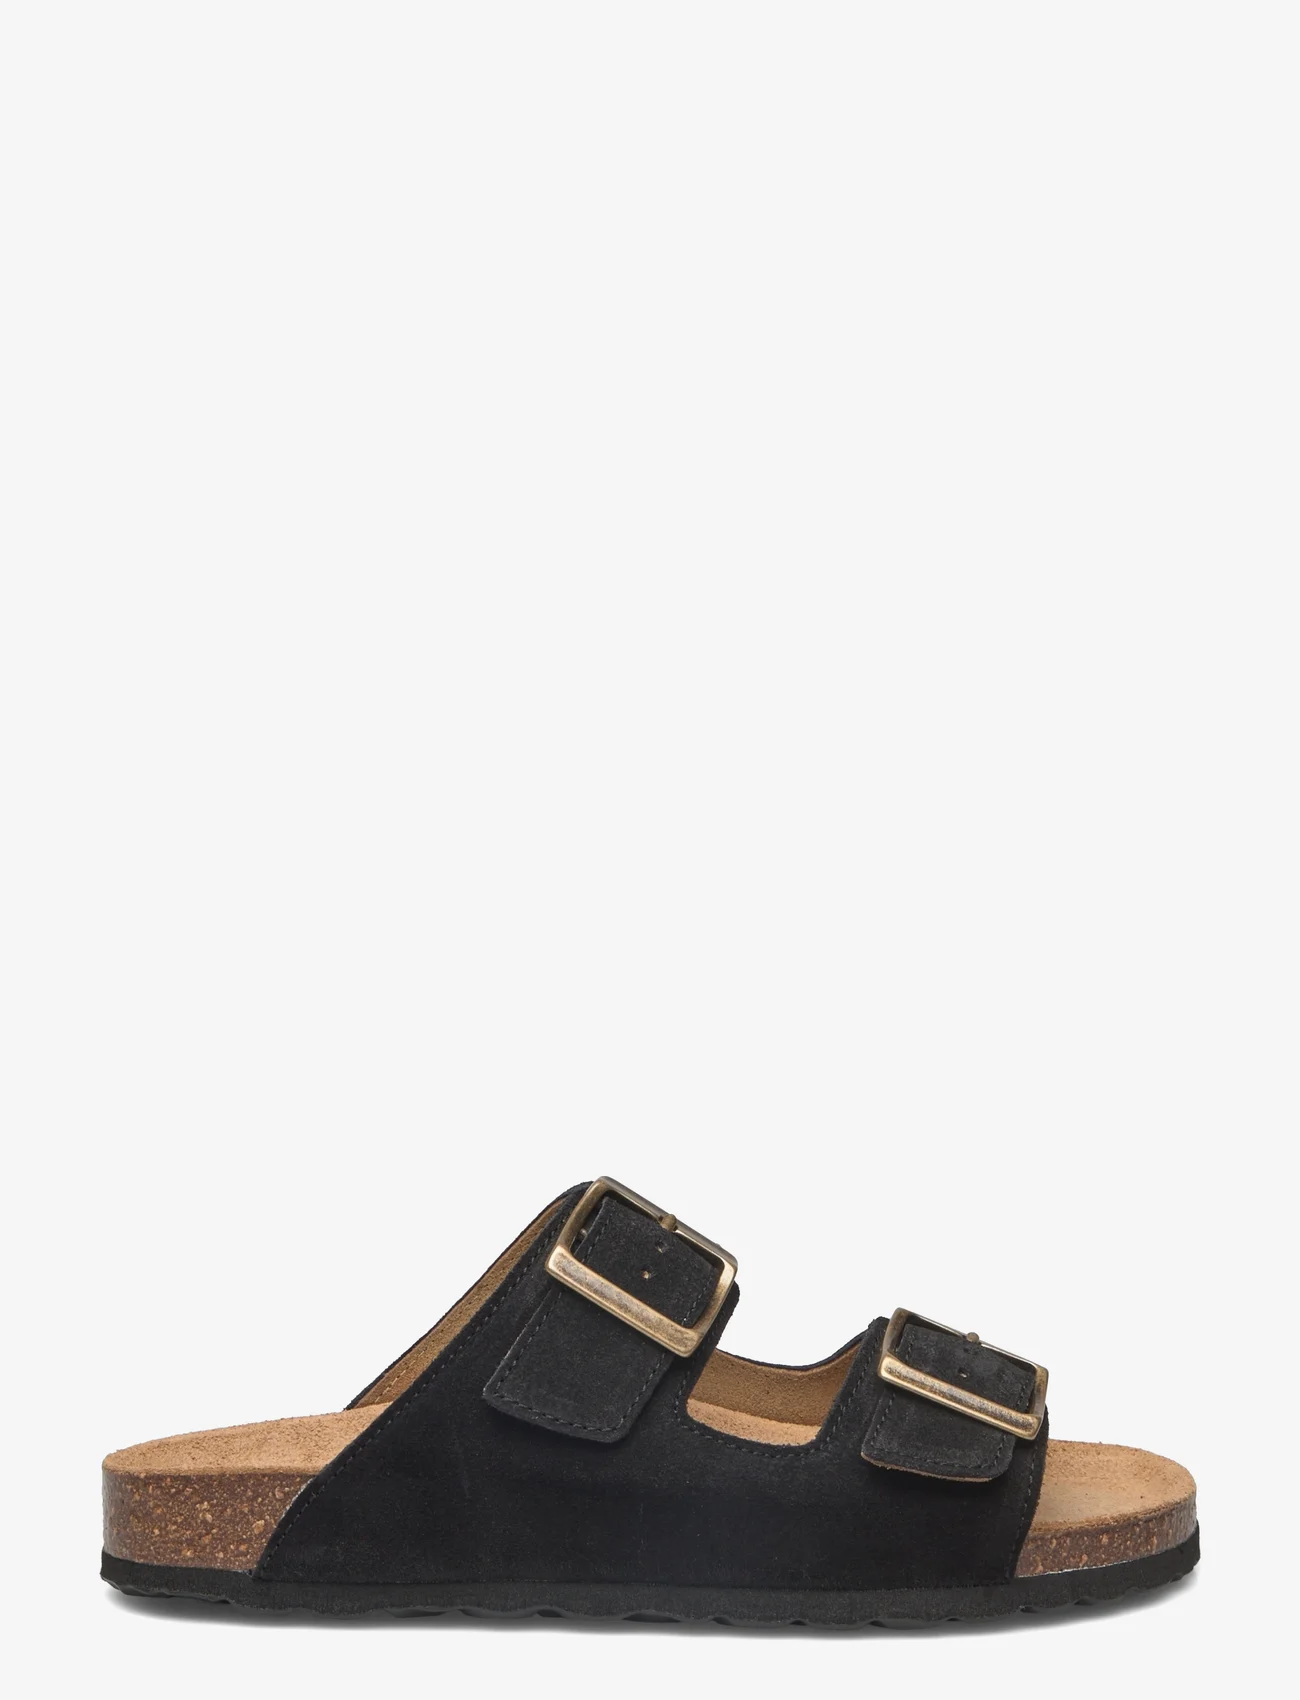 Sofie Schnoor - Slipper - flat sandals - black - 1